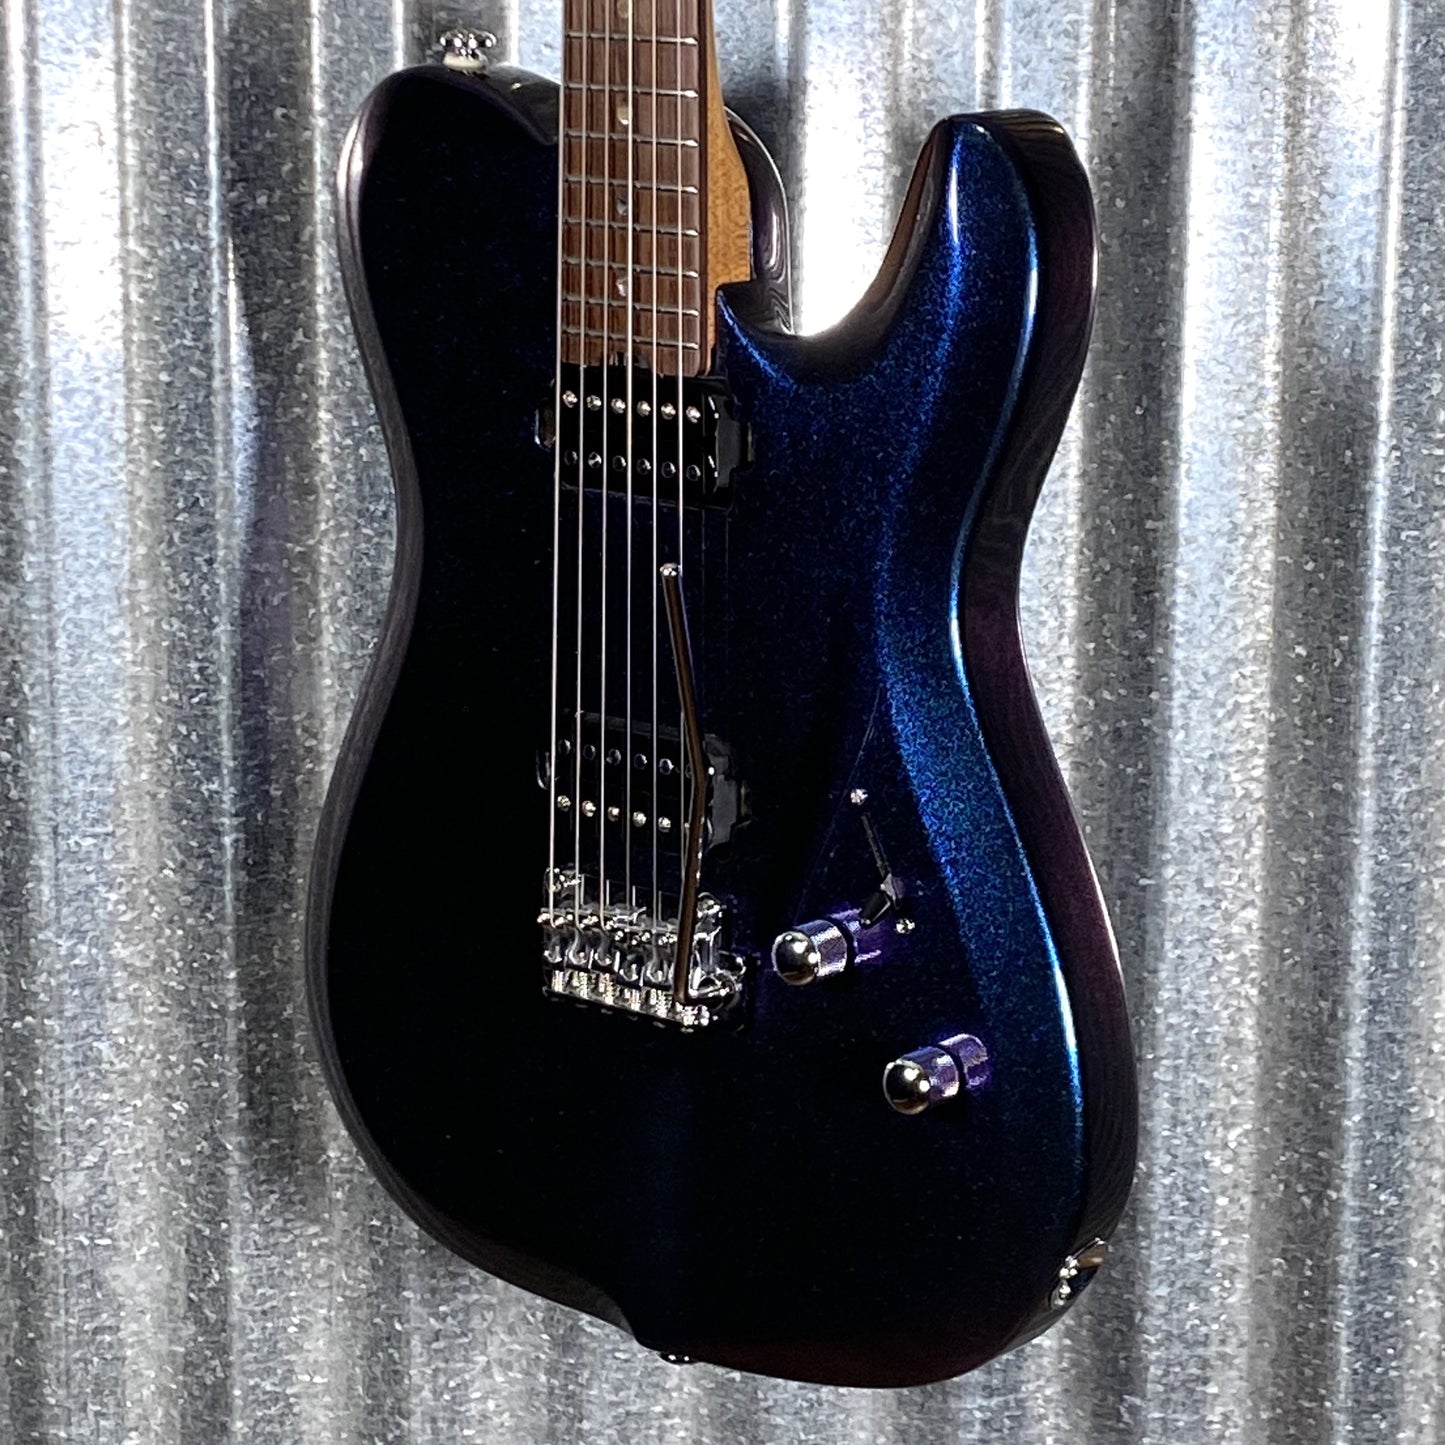 Musi Virgo Fusion Telecaster Deluxe Tremolo Indigo Blue Guitar #0486 Used